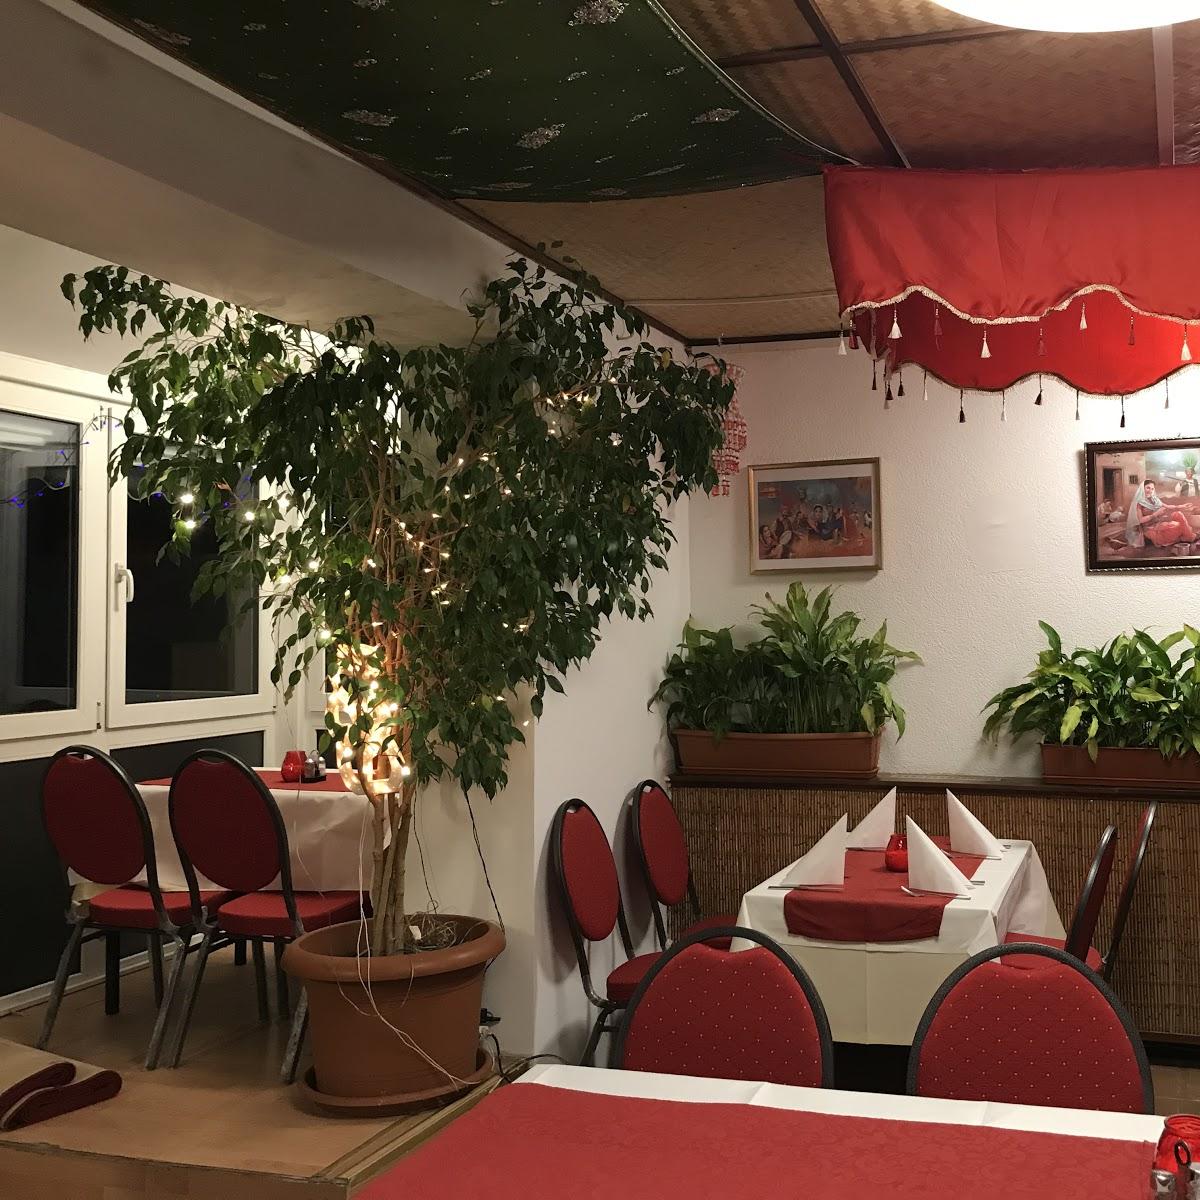 Restaurant "Indian Palace House" in Nürnberg